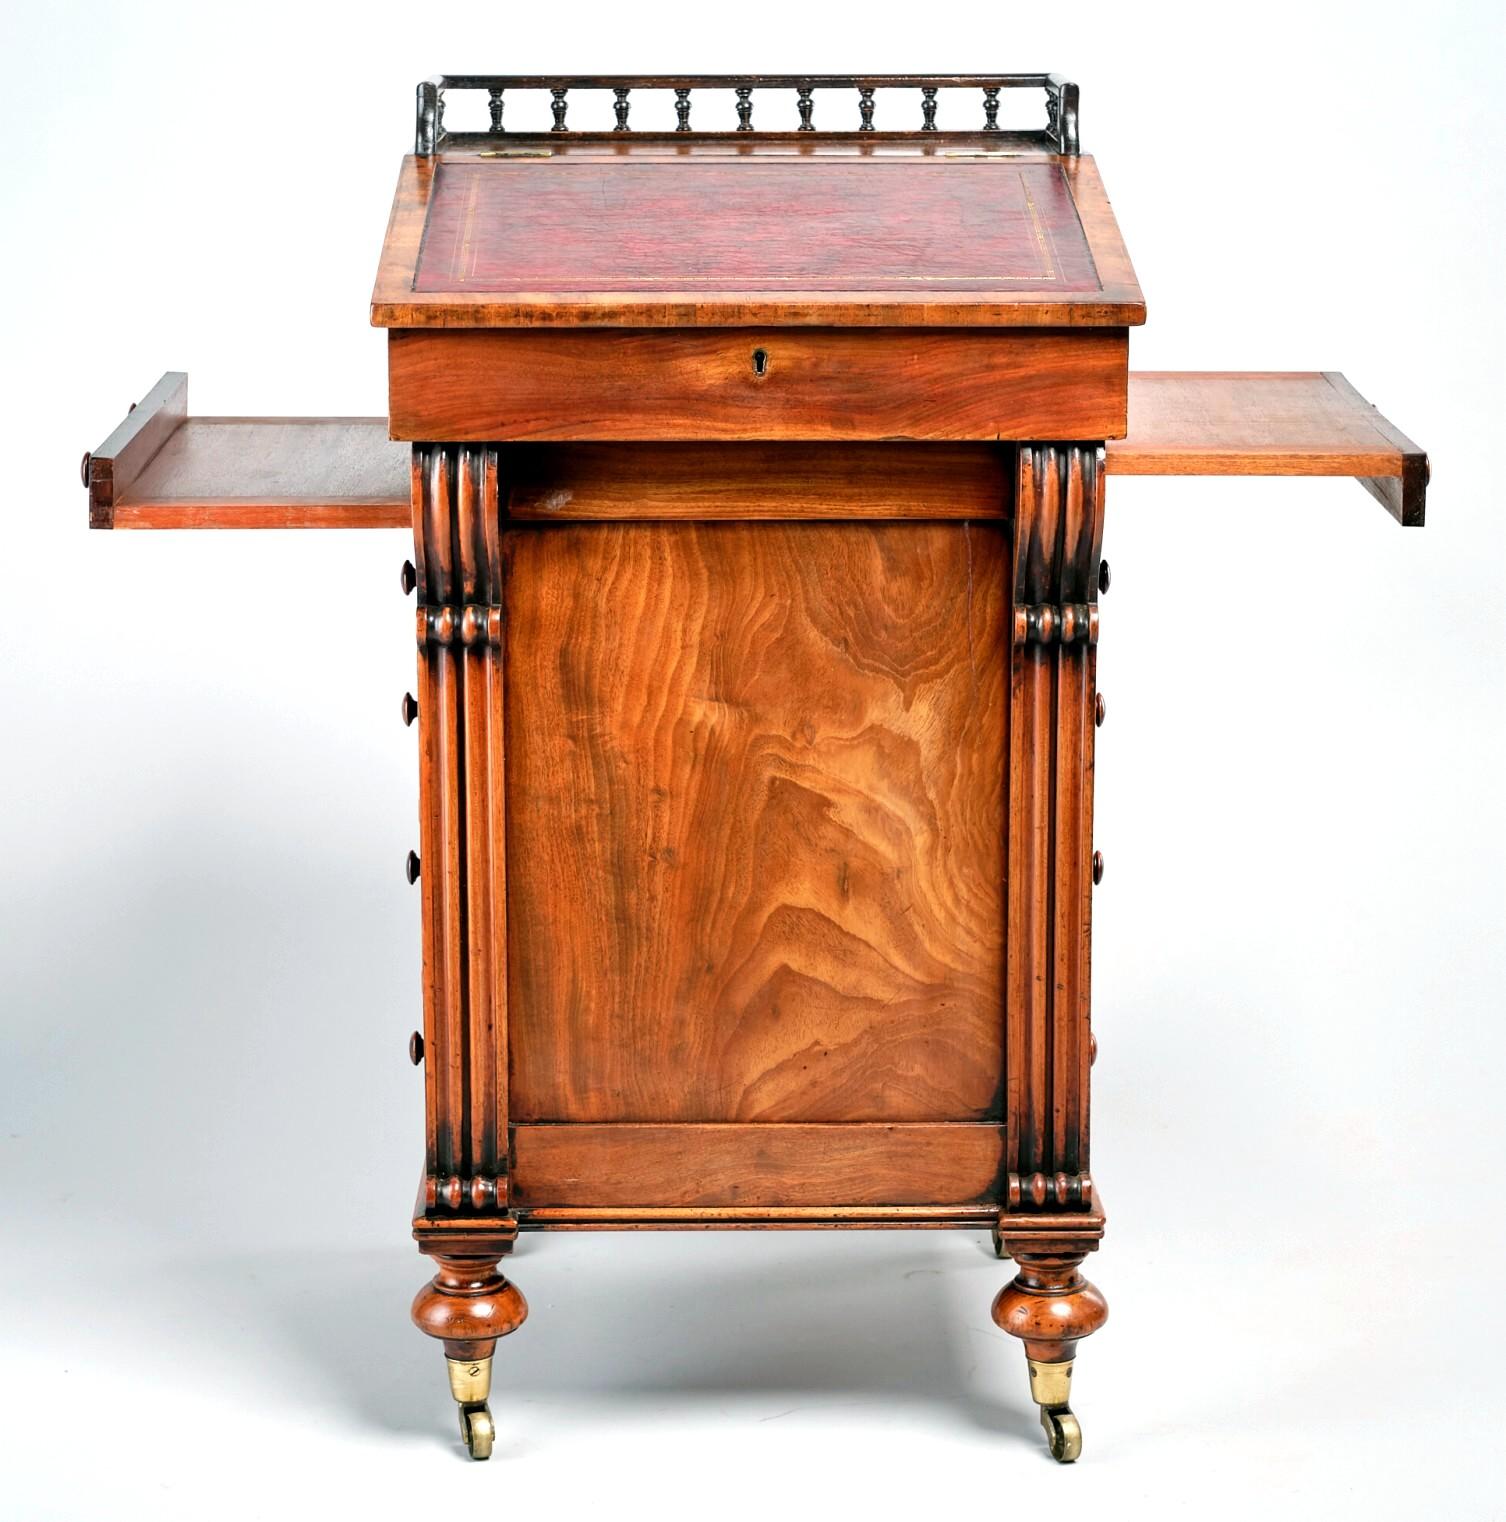 A Superior English Regency Period Davenport Desk in Figured Mahogany, Circa 1830 For Sale 12